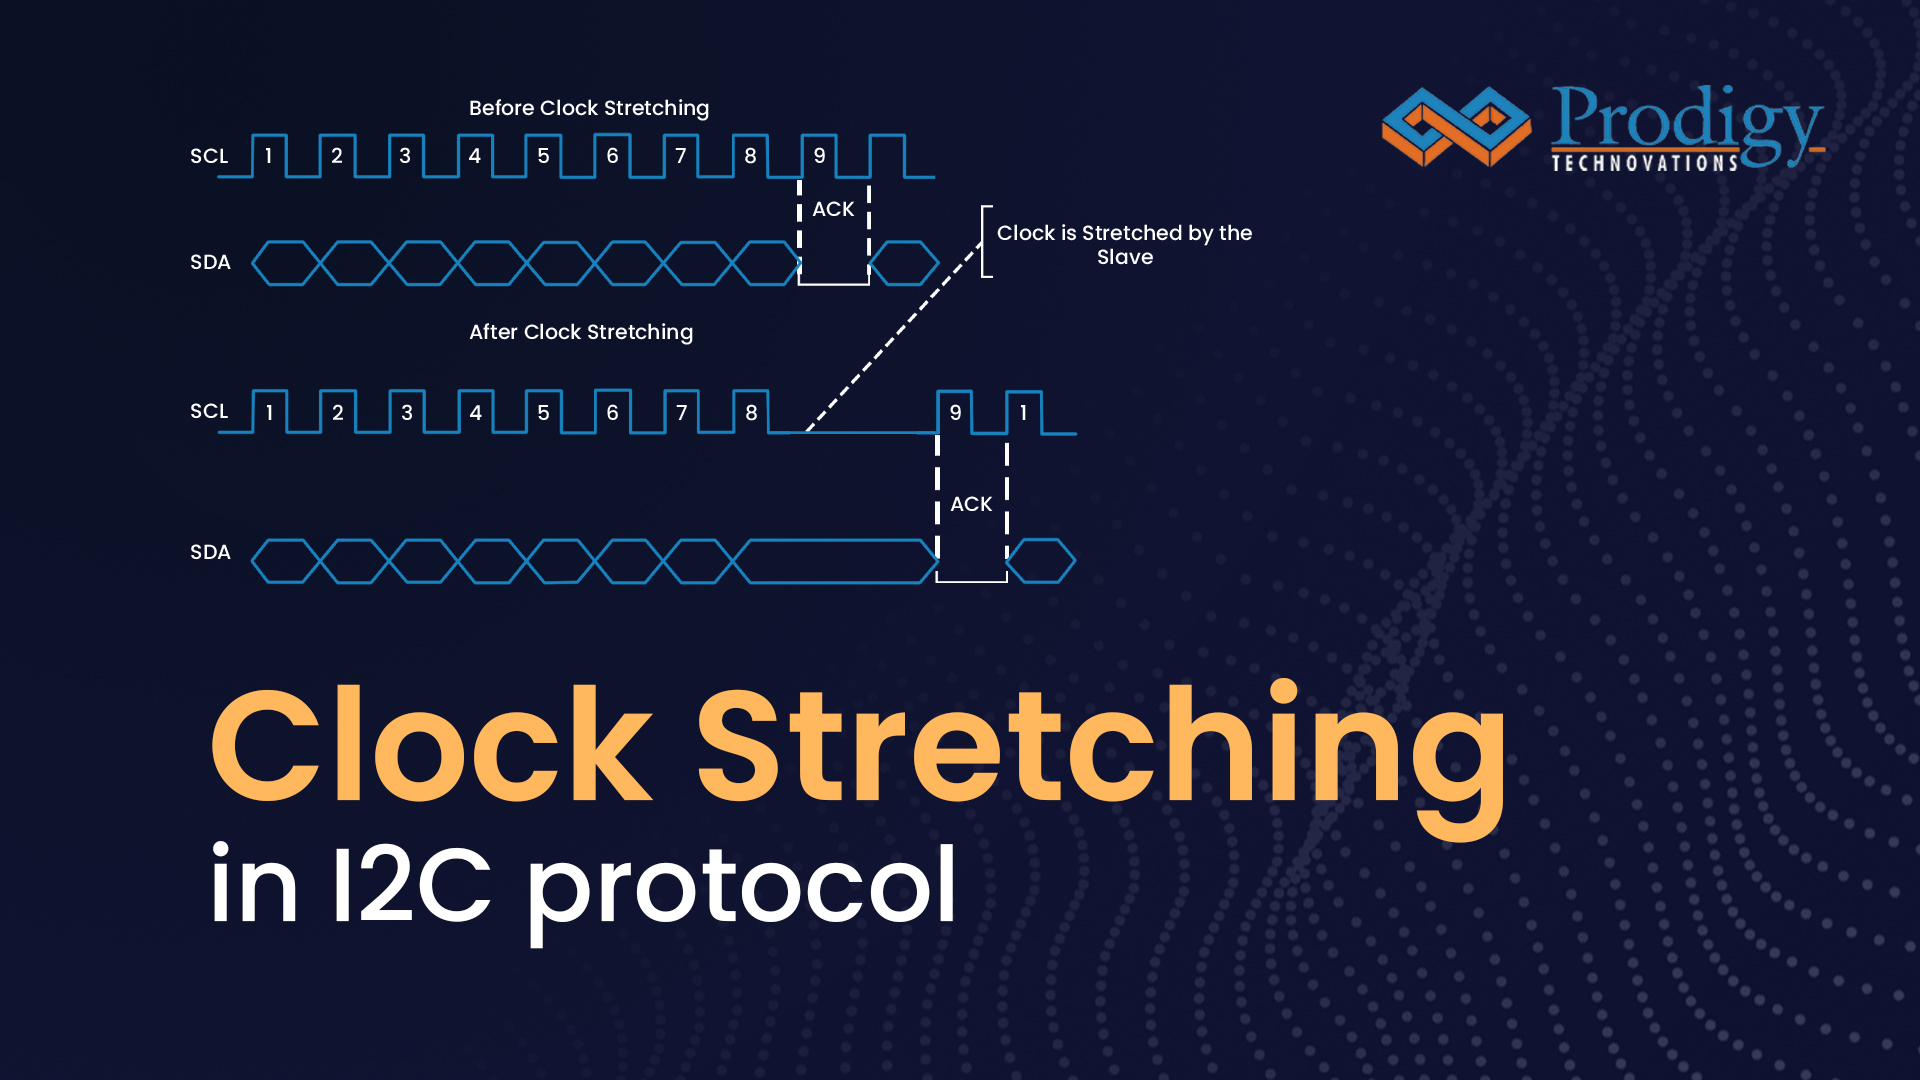 Clock Stretching in I2C protocol